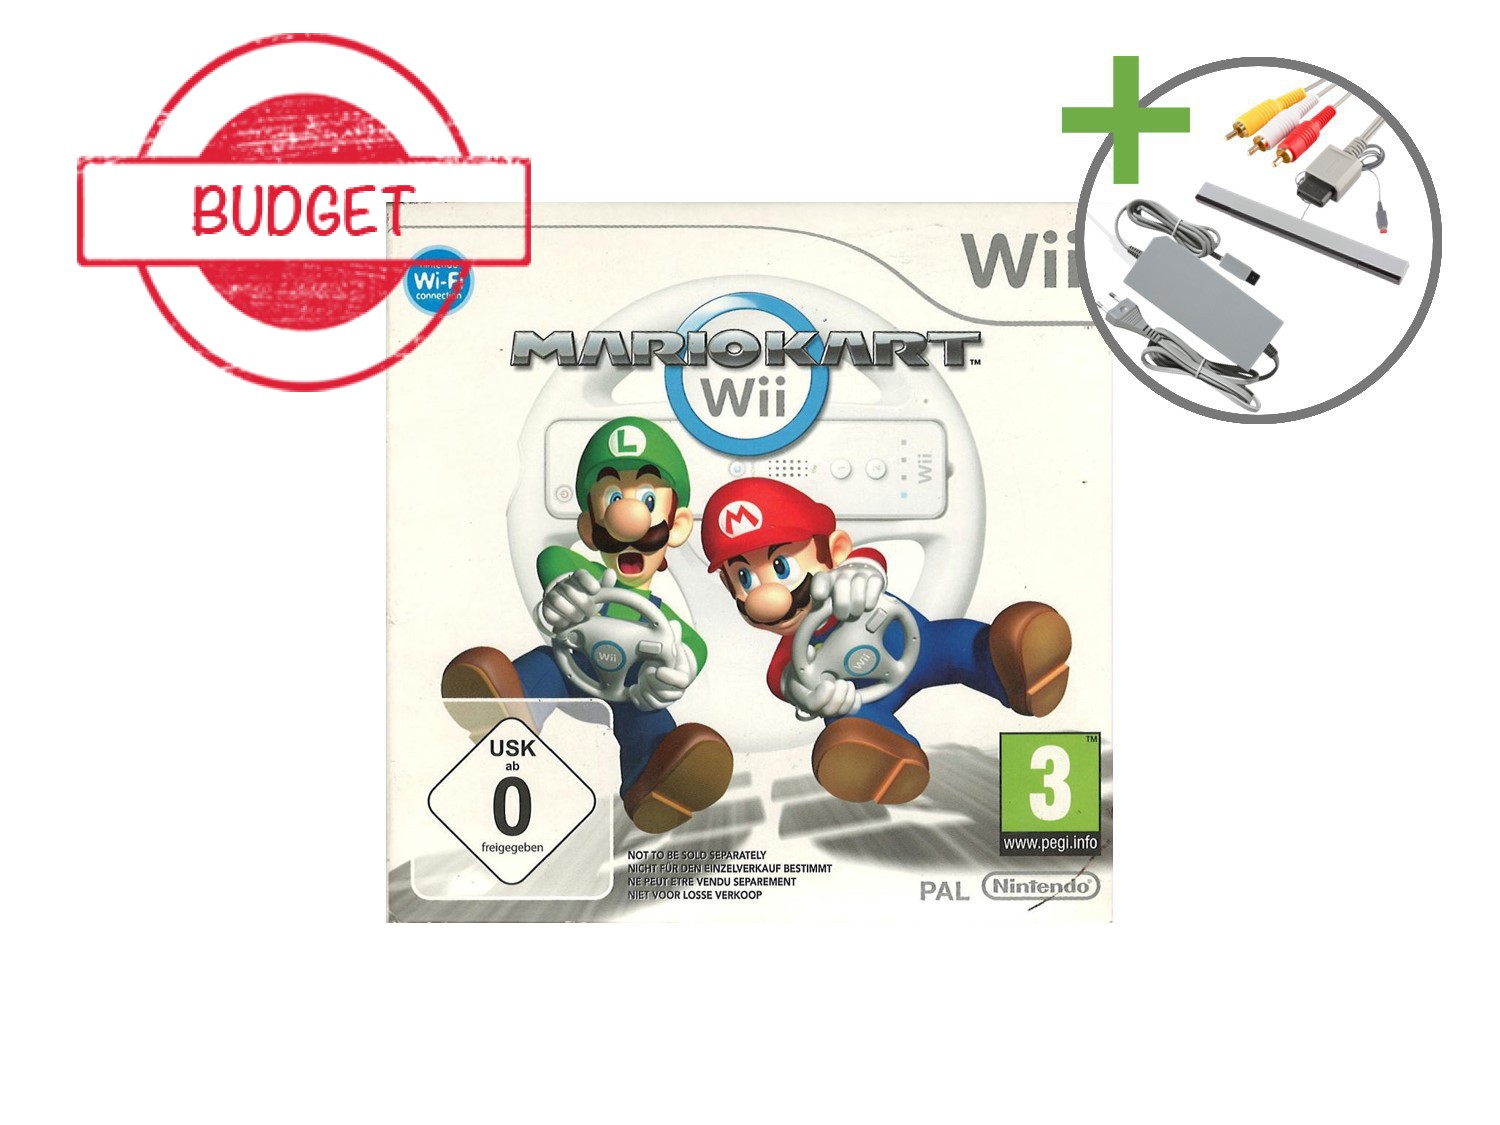 Nintendo Wii Starter Pack - Mario Kart Motion Plus White Edition - Budget - Wii Hardware - 5